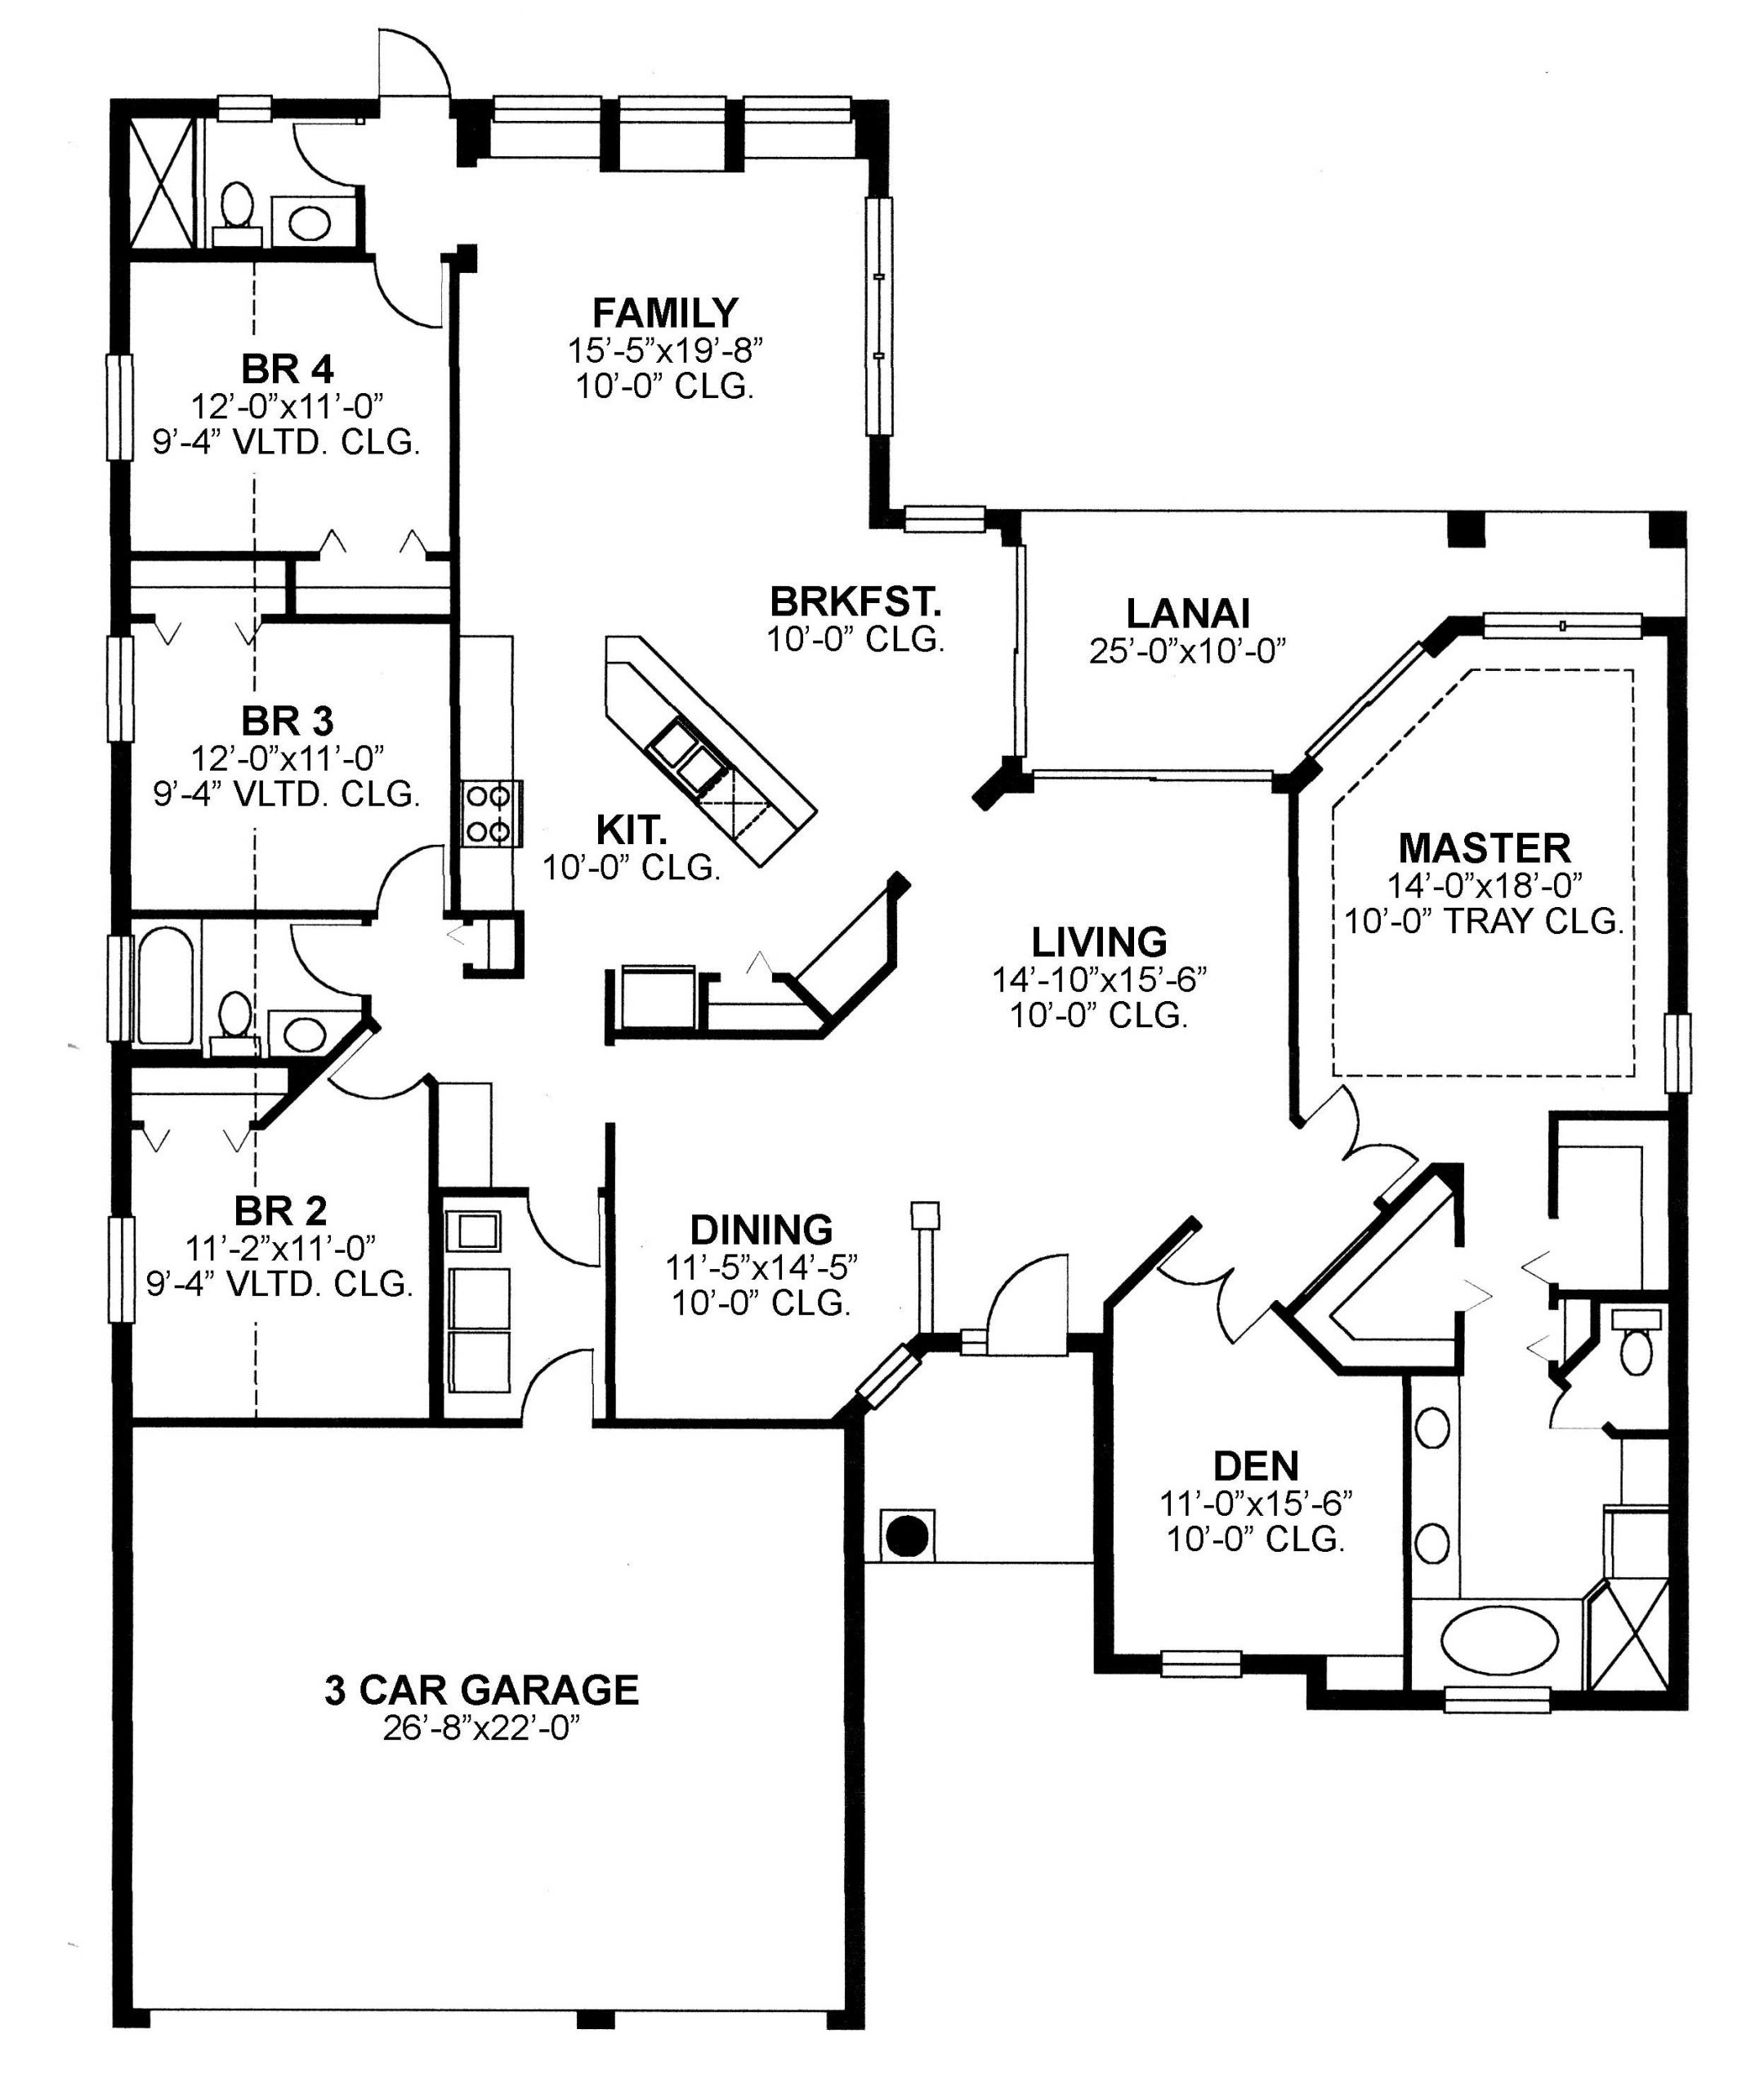 Home Plan First Floor - floorplans.click